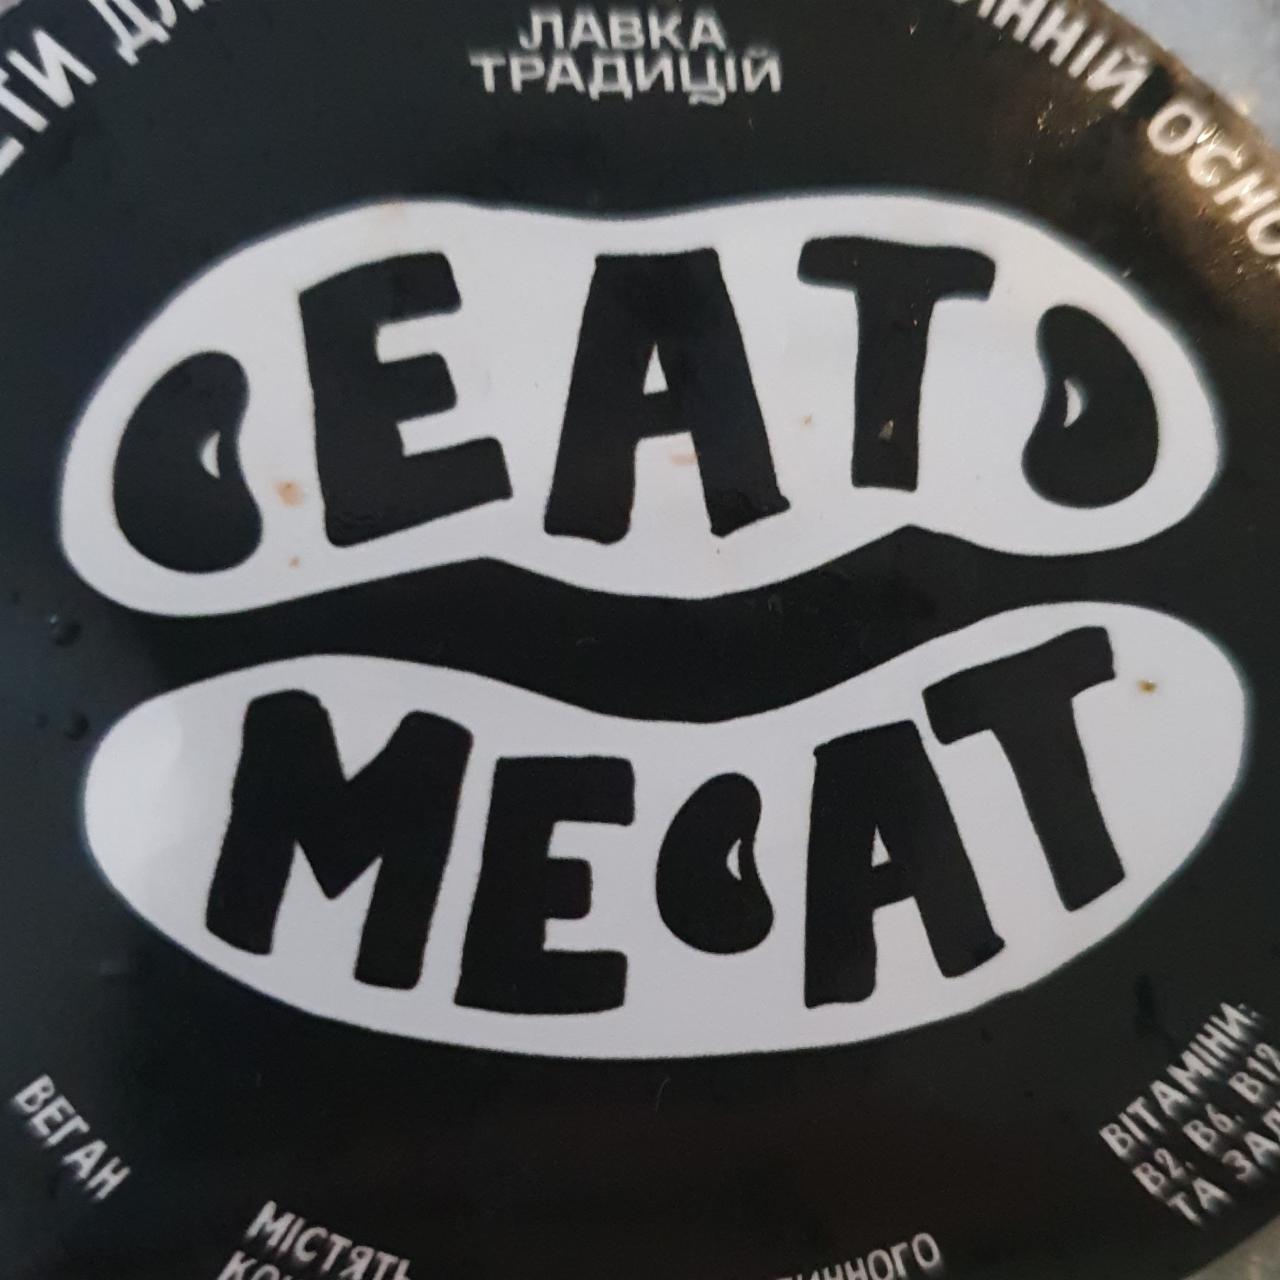 Фото - Веган котлети Eat Meat Лавка Традицій